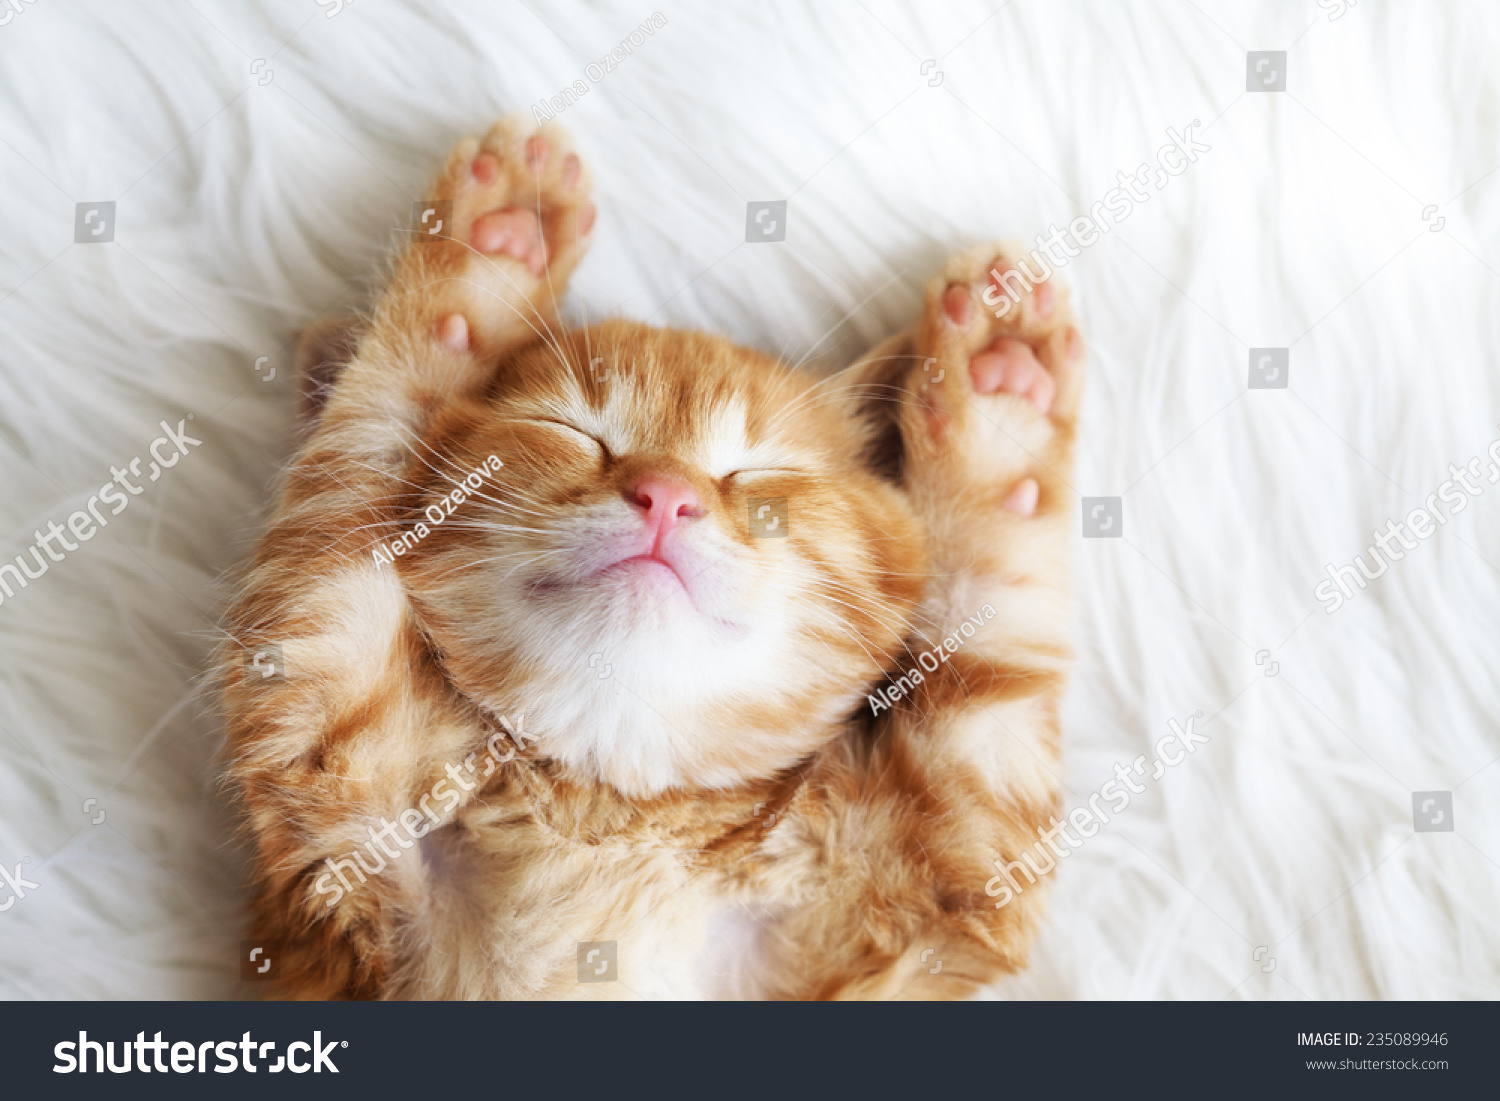 Cute little red kitten sleeps on fur white blanket